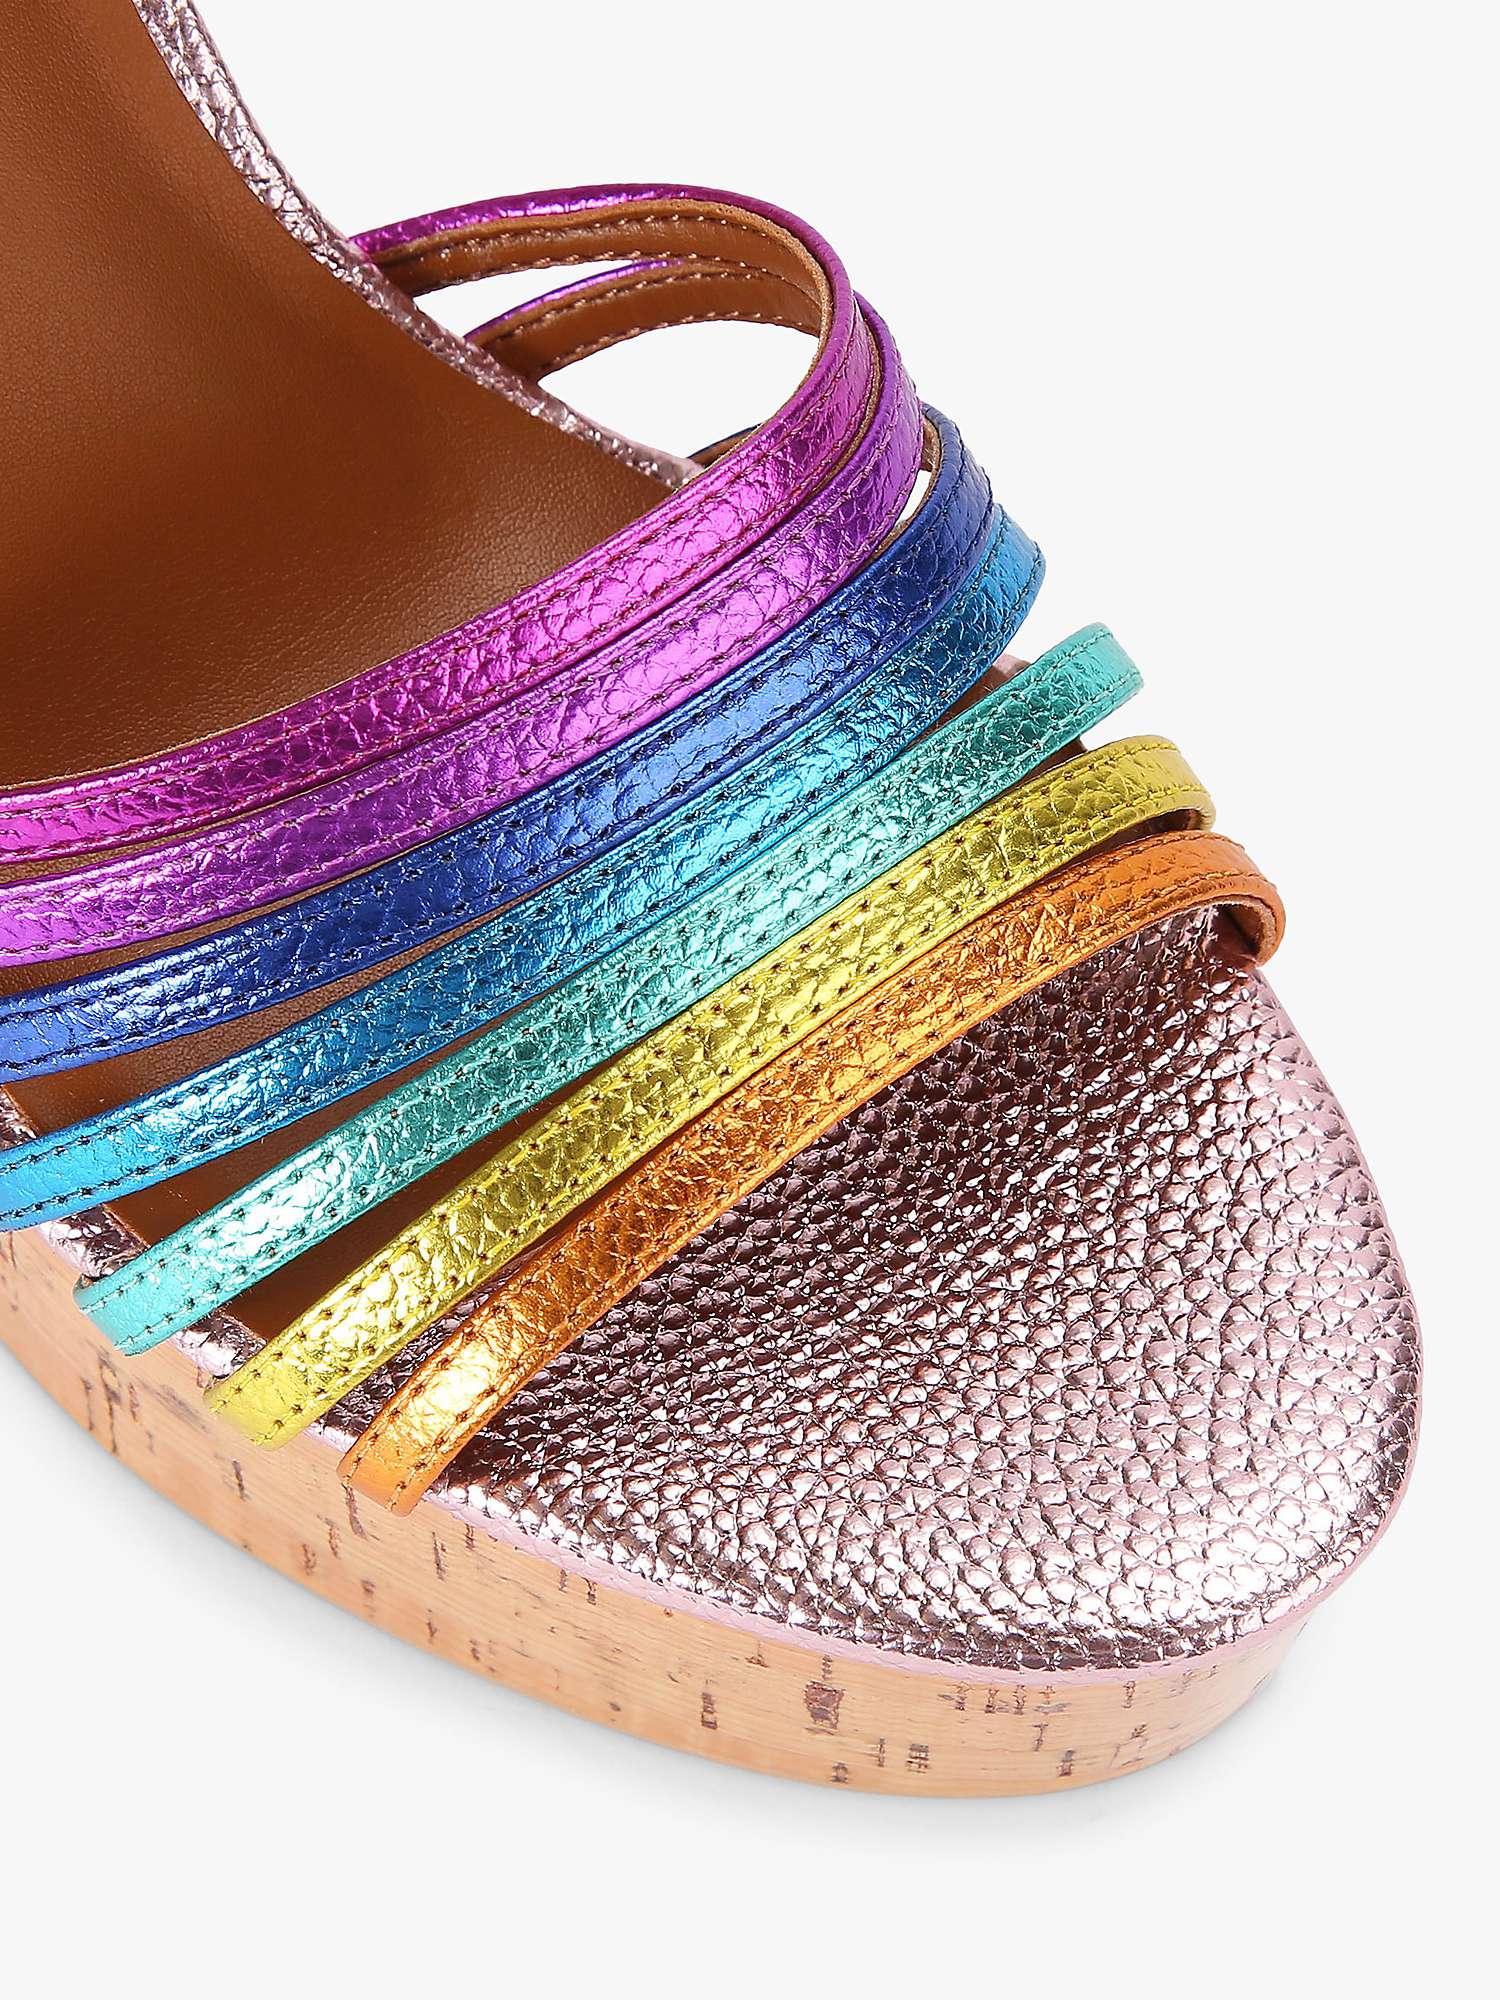 Buy Kurt Geiger London Pierra Leather Cork Wedge Heel Sandals, Multi Online at johnlewis.com